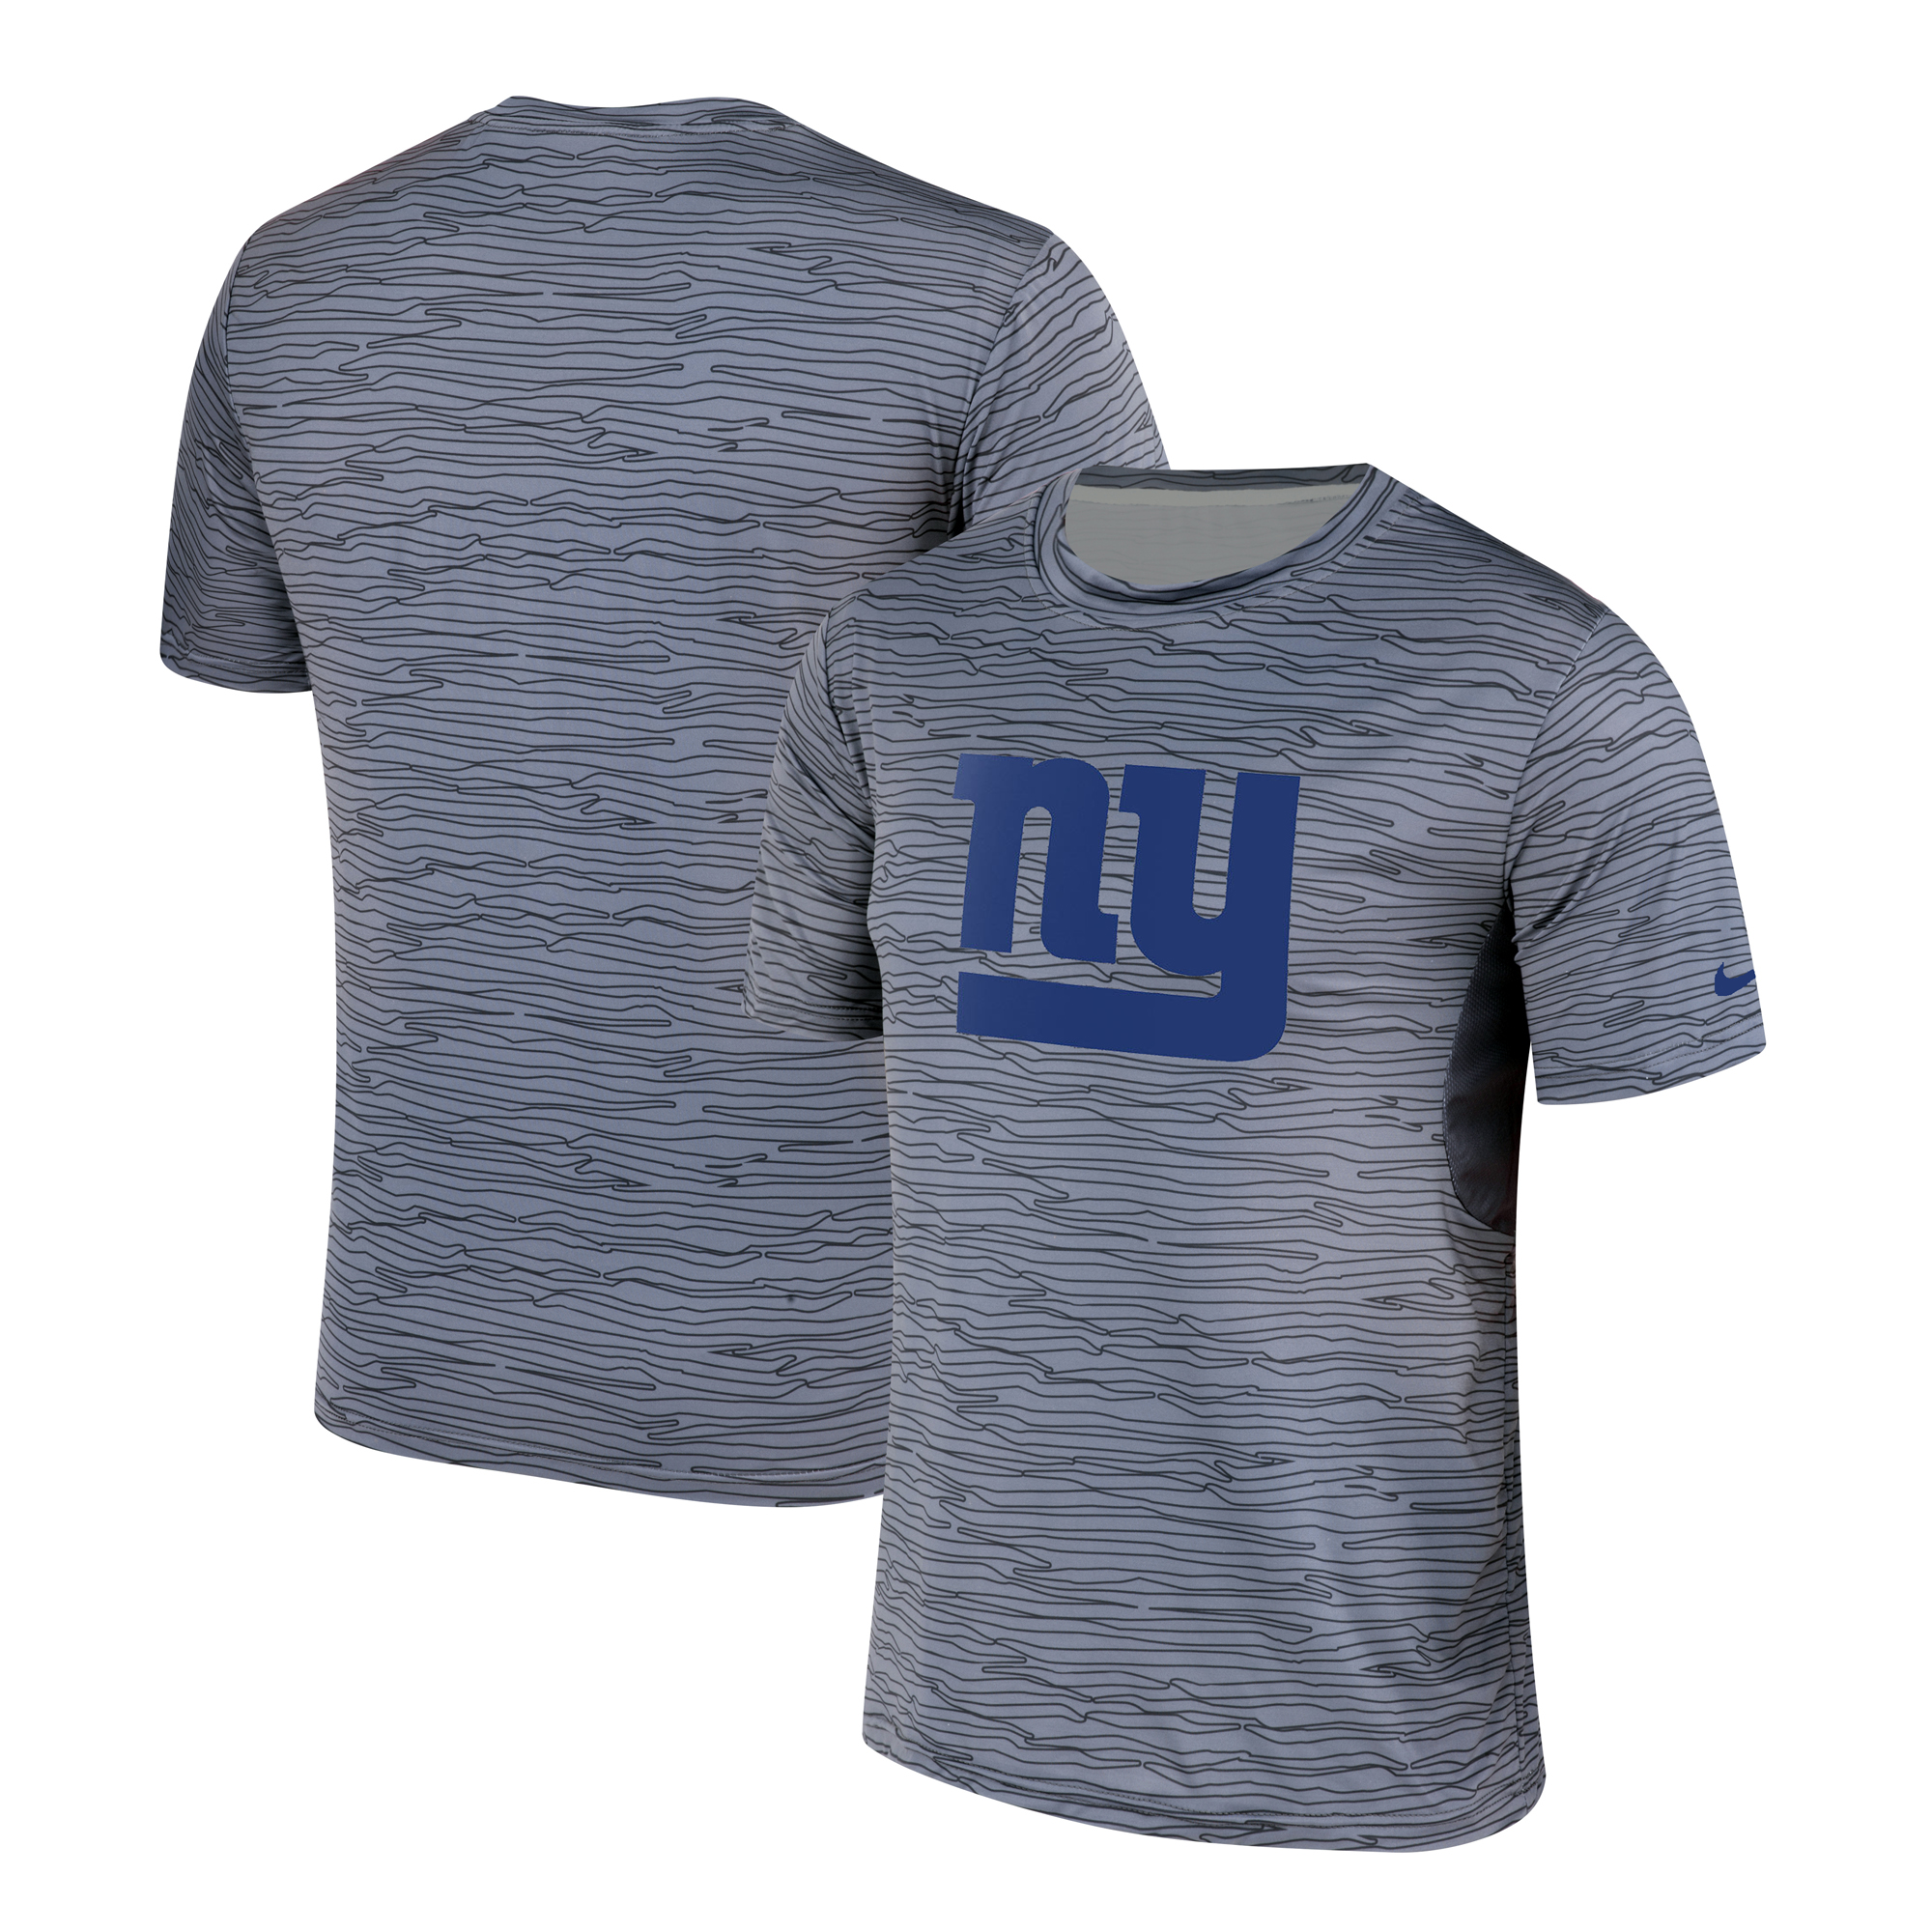 Men's New York Giants Nike Gray Black Striped Logo Performance T-Shirt